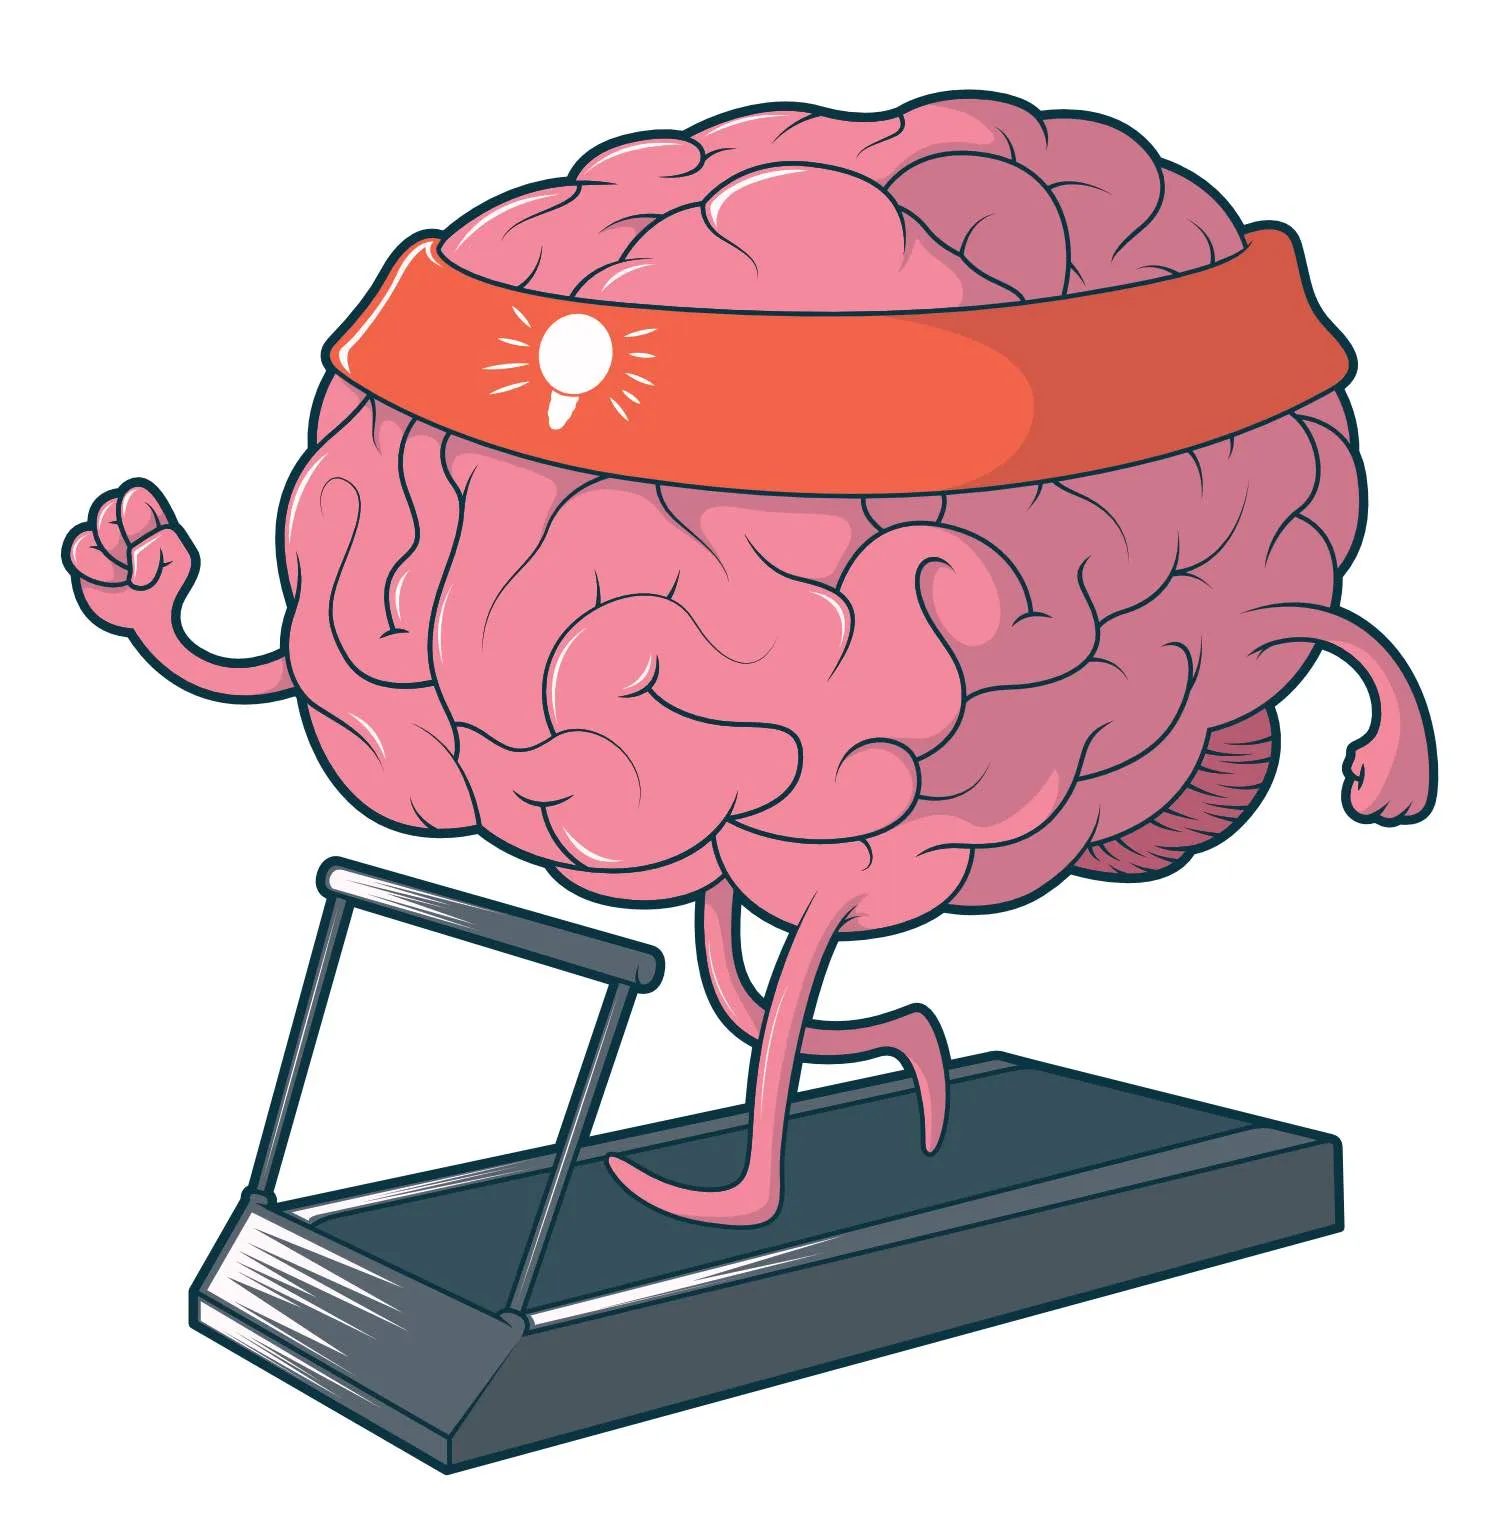 A brain running on a treadmill